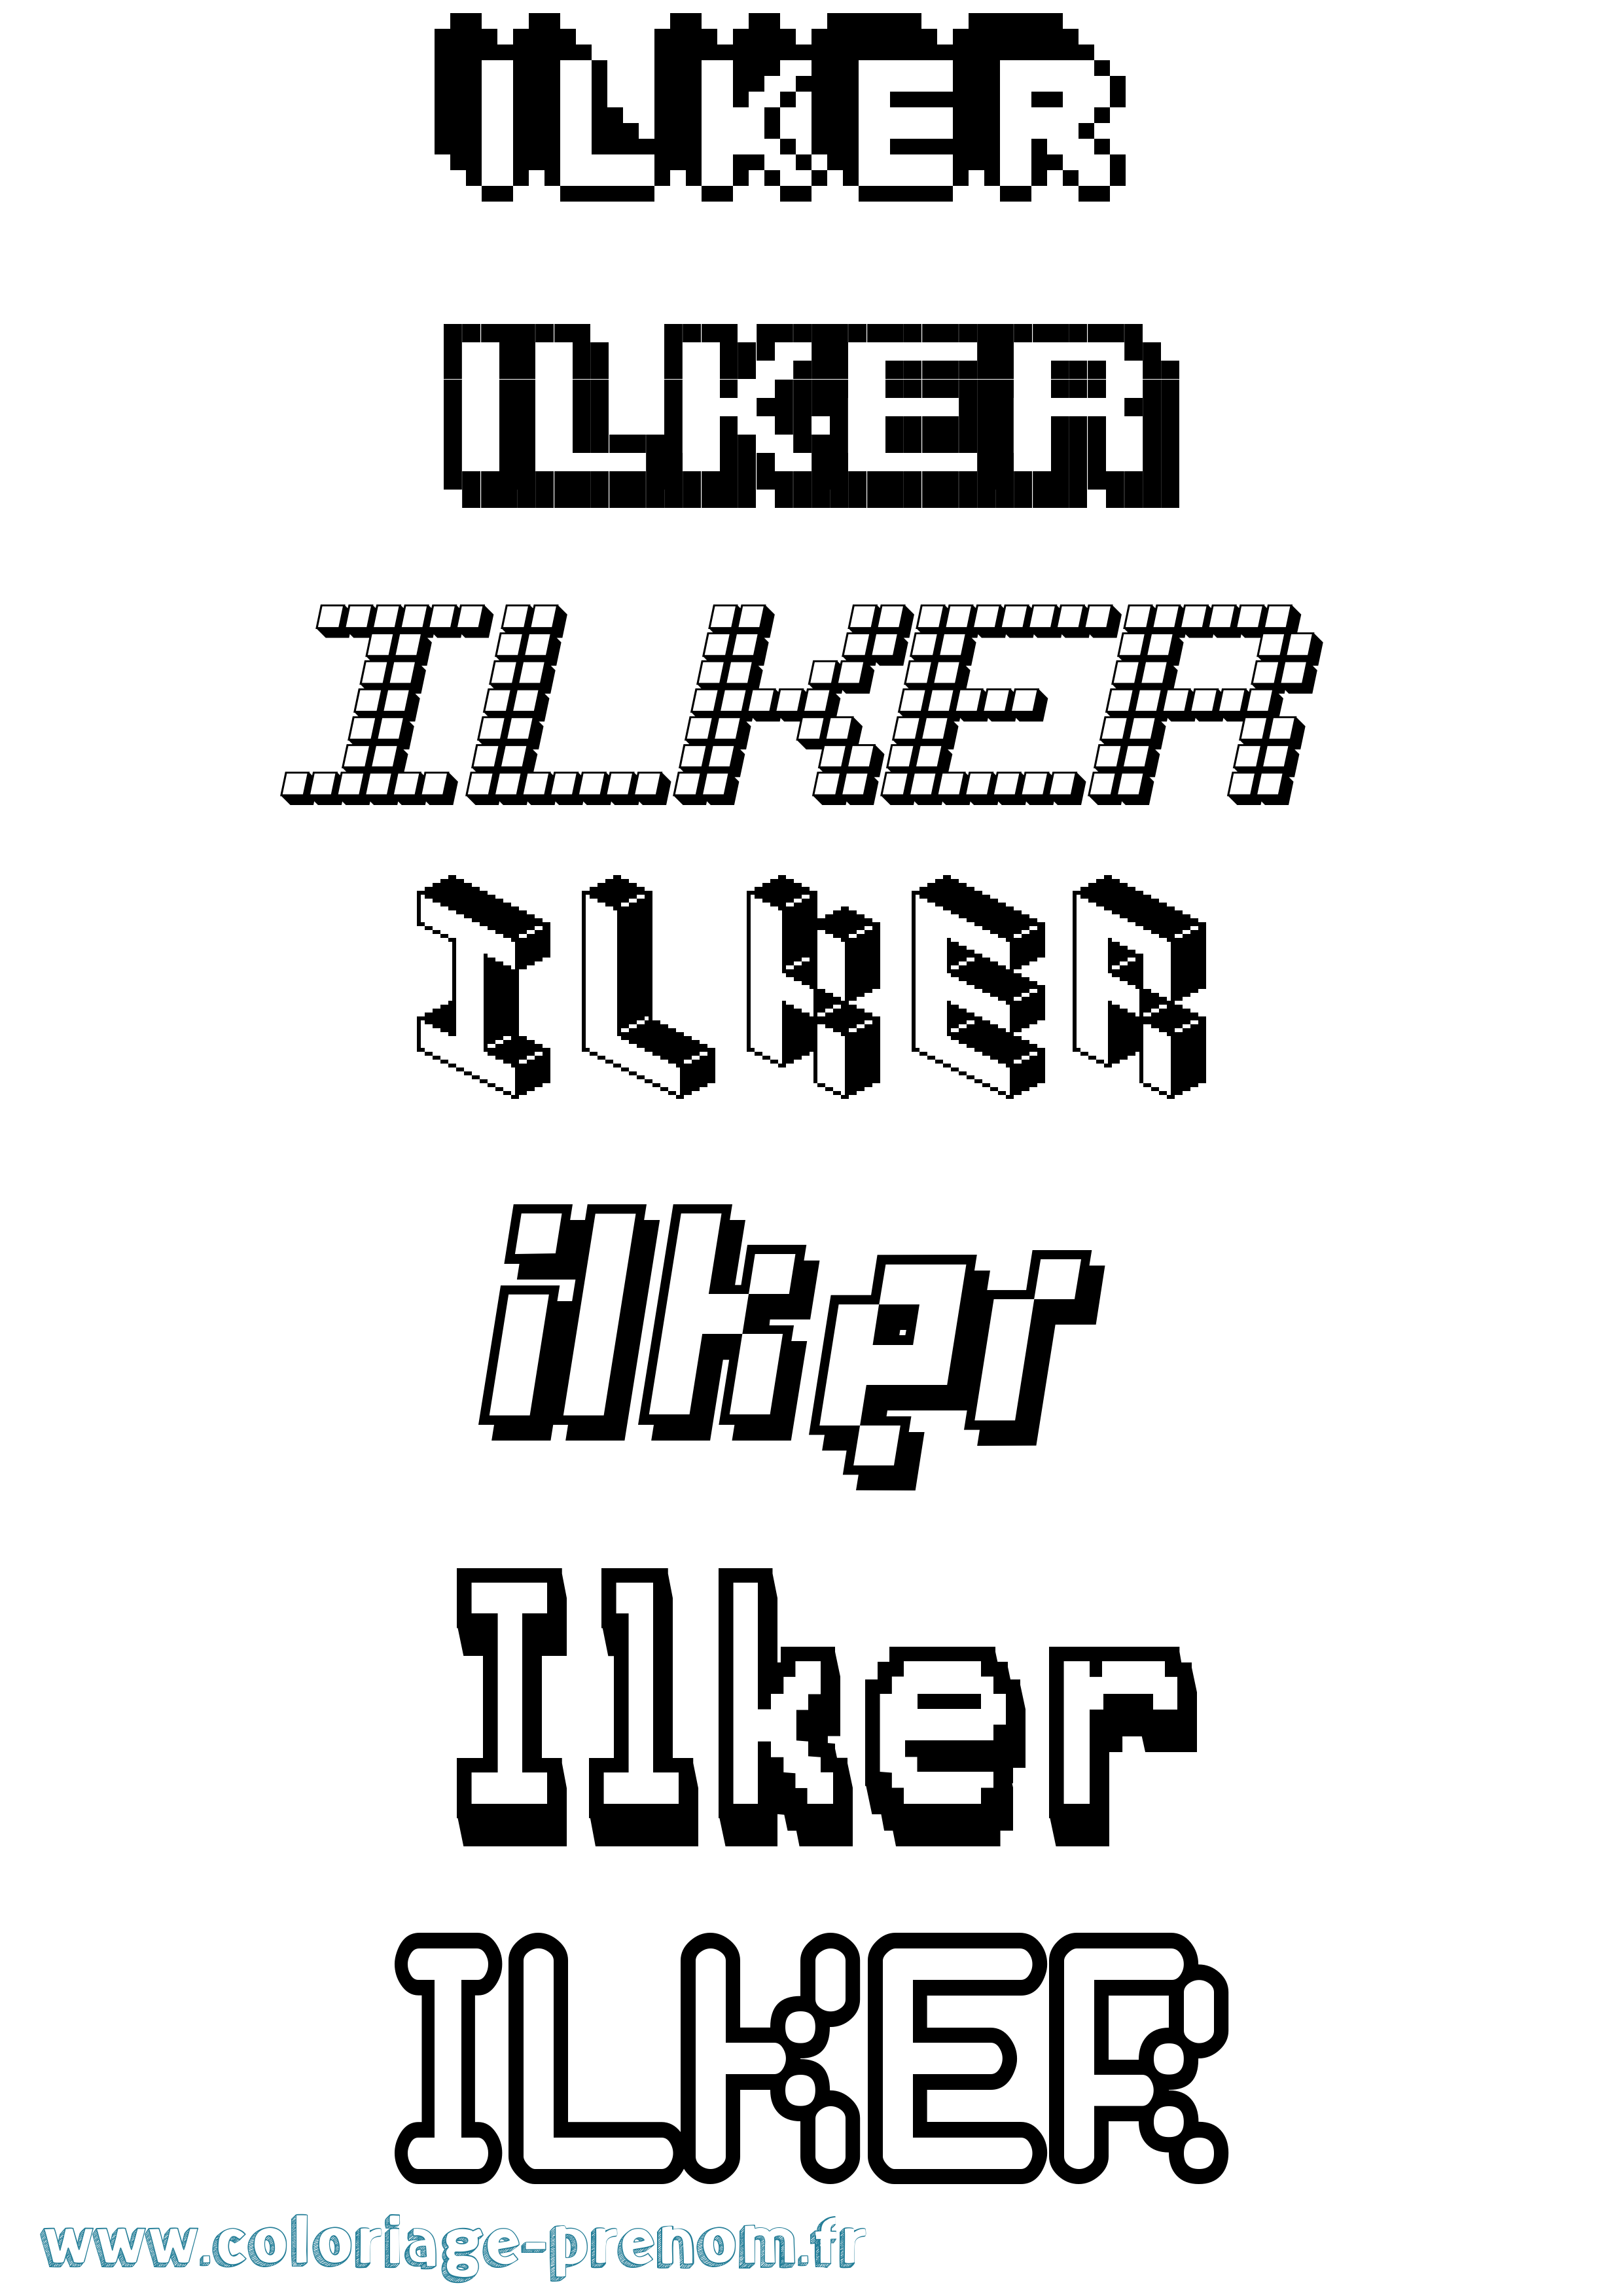 Coloriage prénom Ilker Pixel